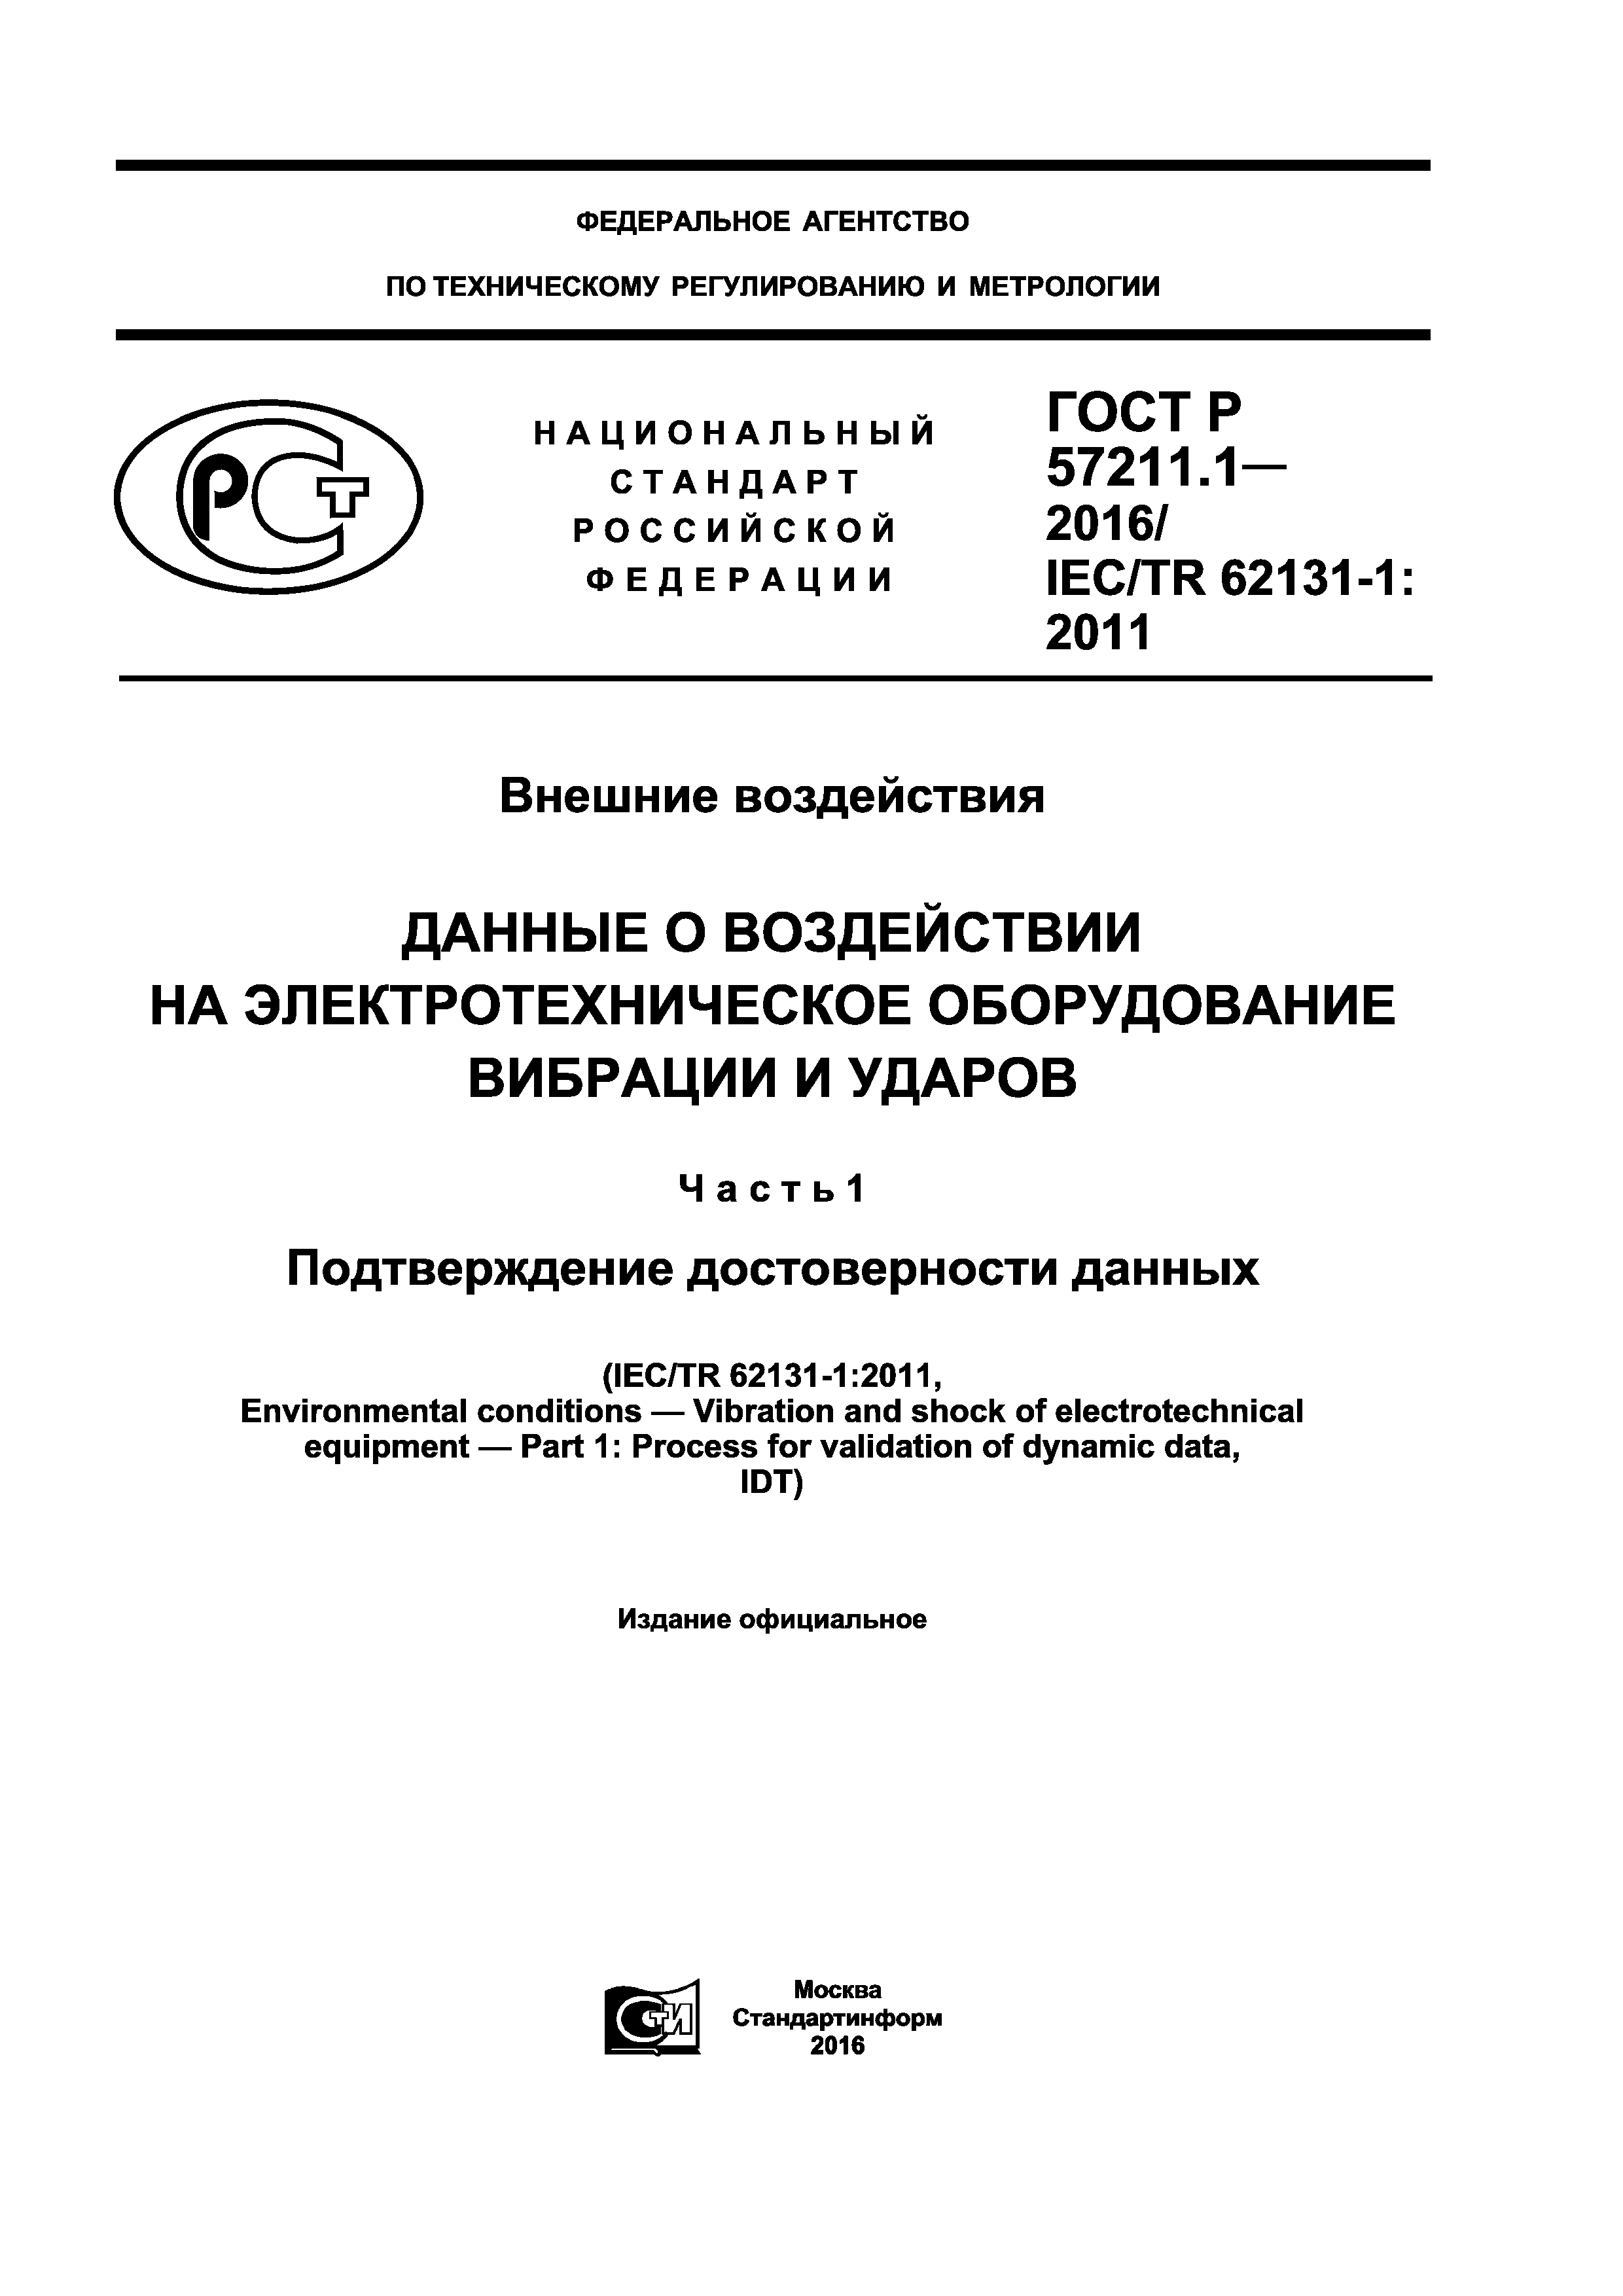 ГОСТ Р 57211.1-2016